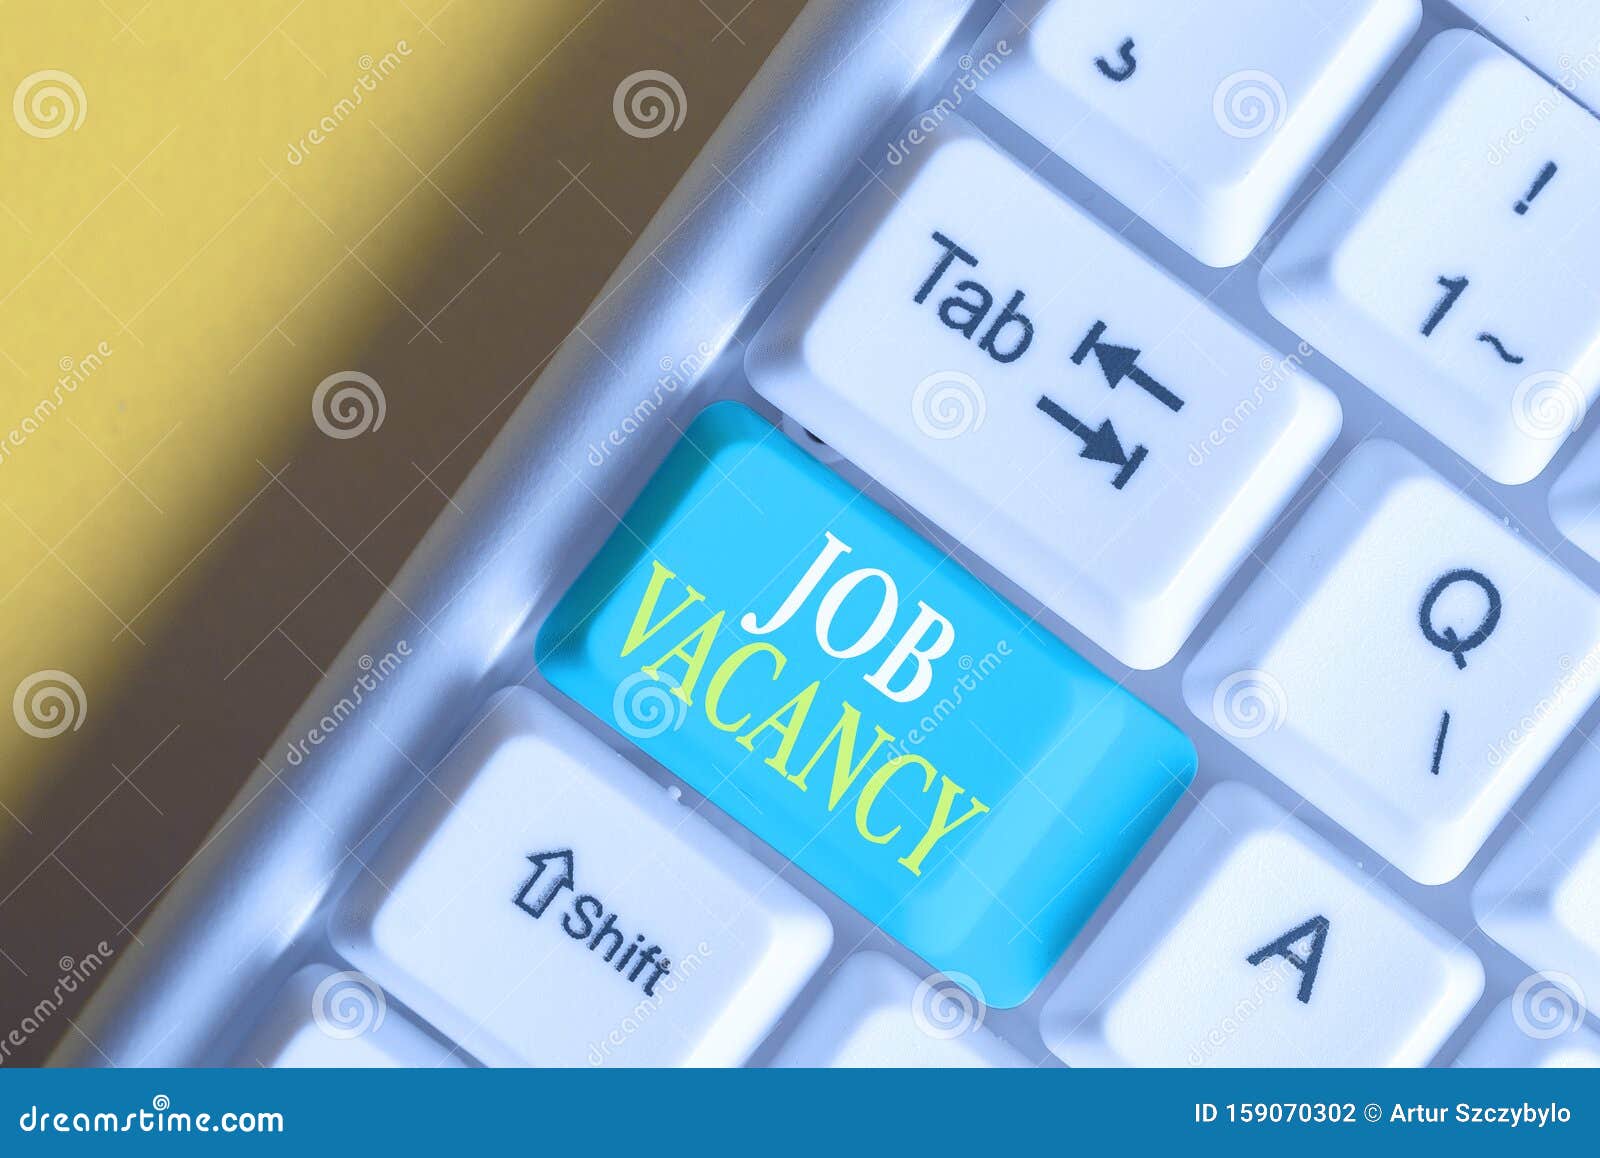 Sales Assistant (Full-time) Job Serene Marketing London